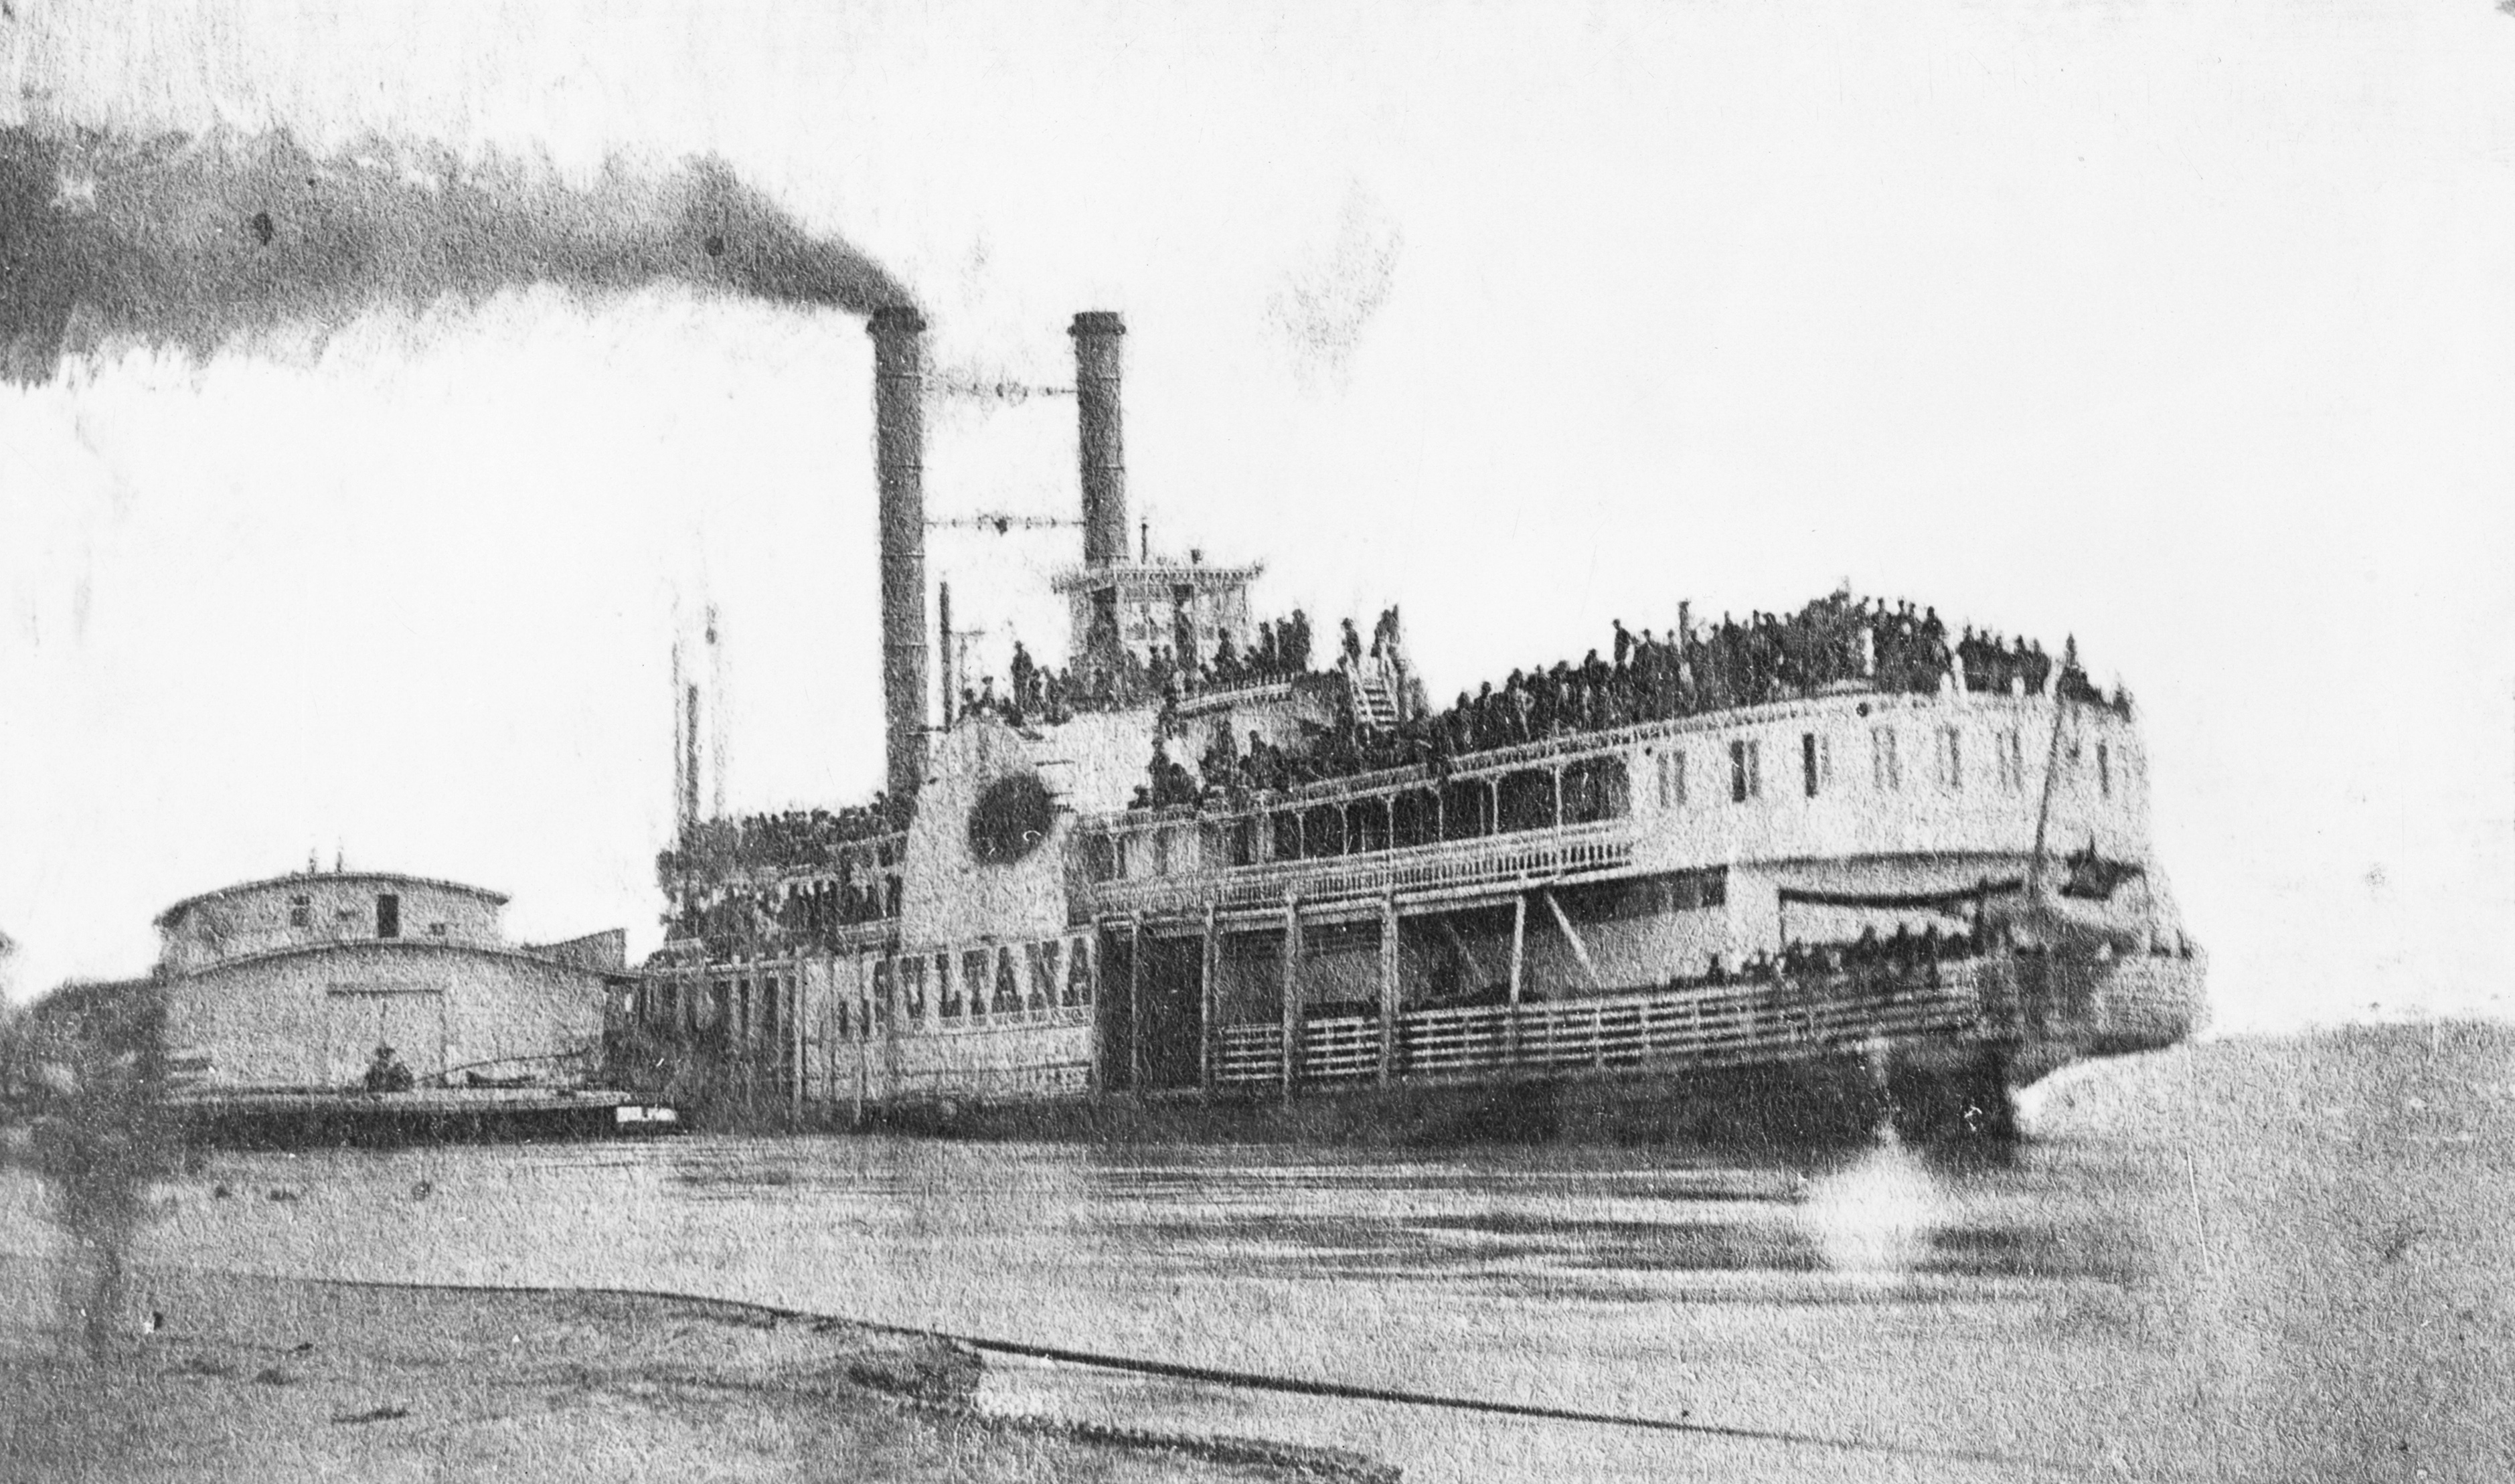 File:Ill-fated Sultana, Helena, Arkansas, April 27, 1865.jpg